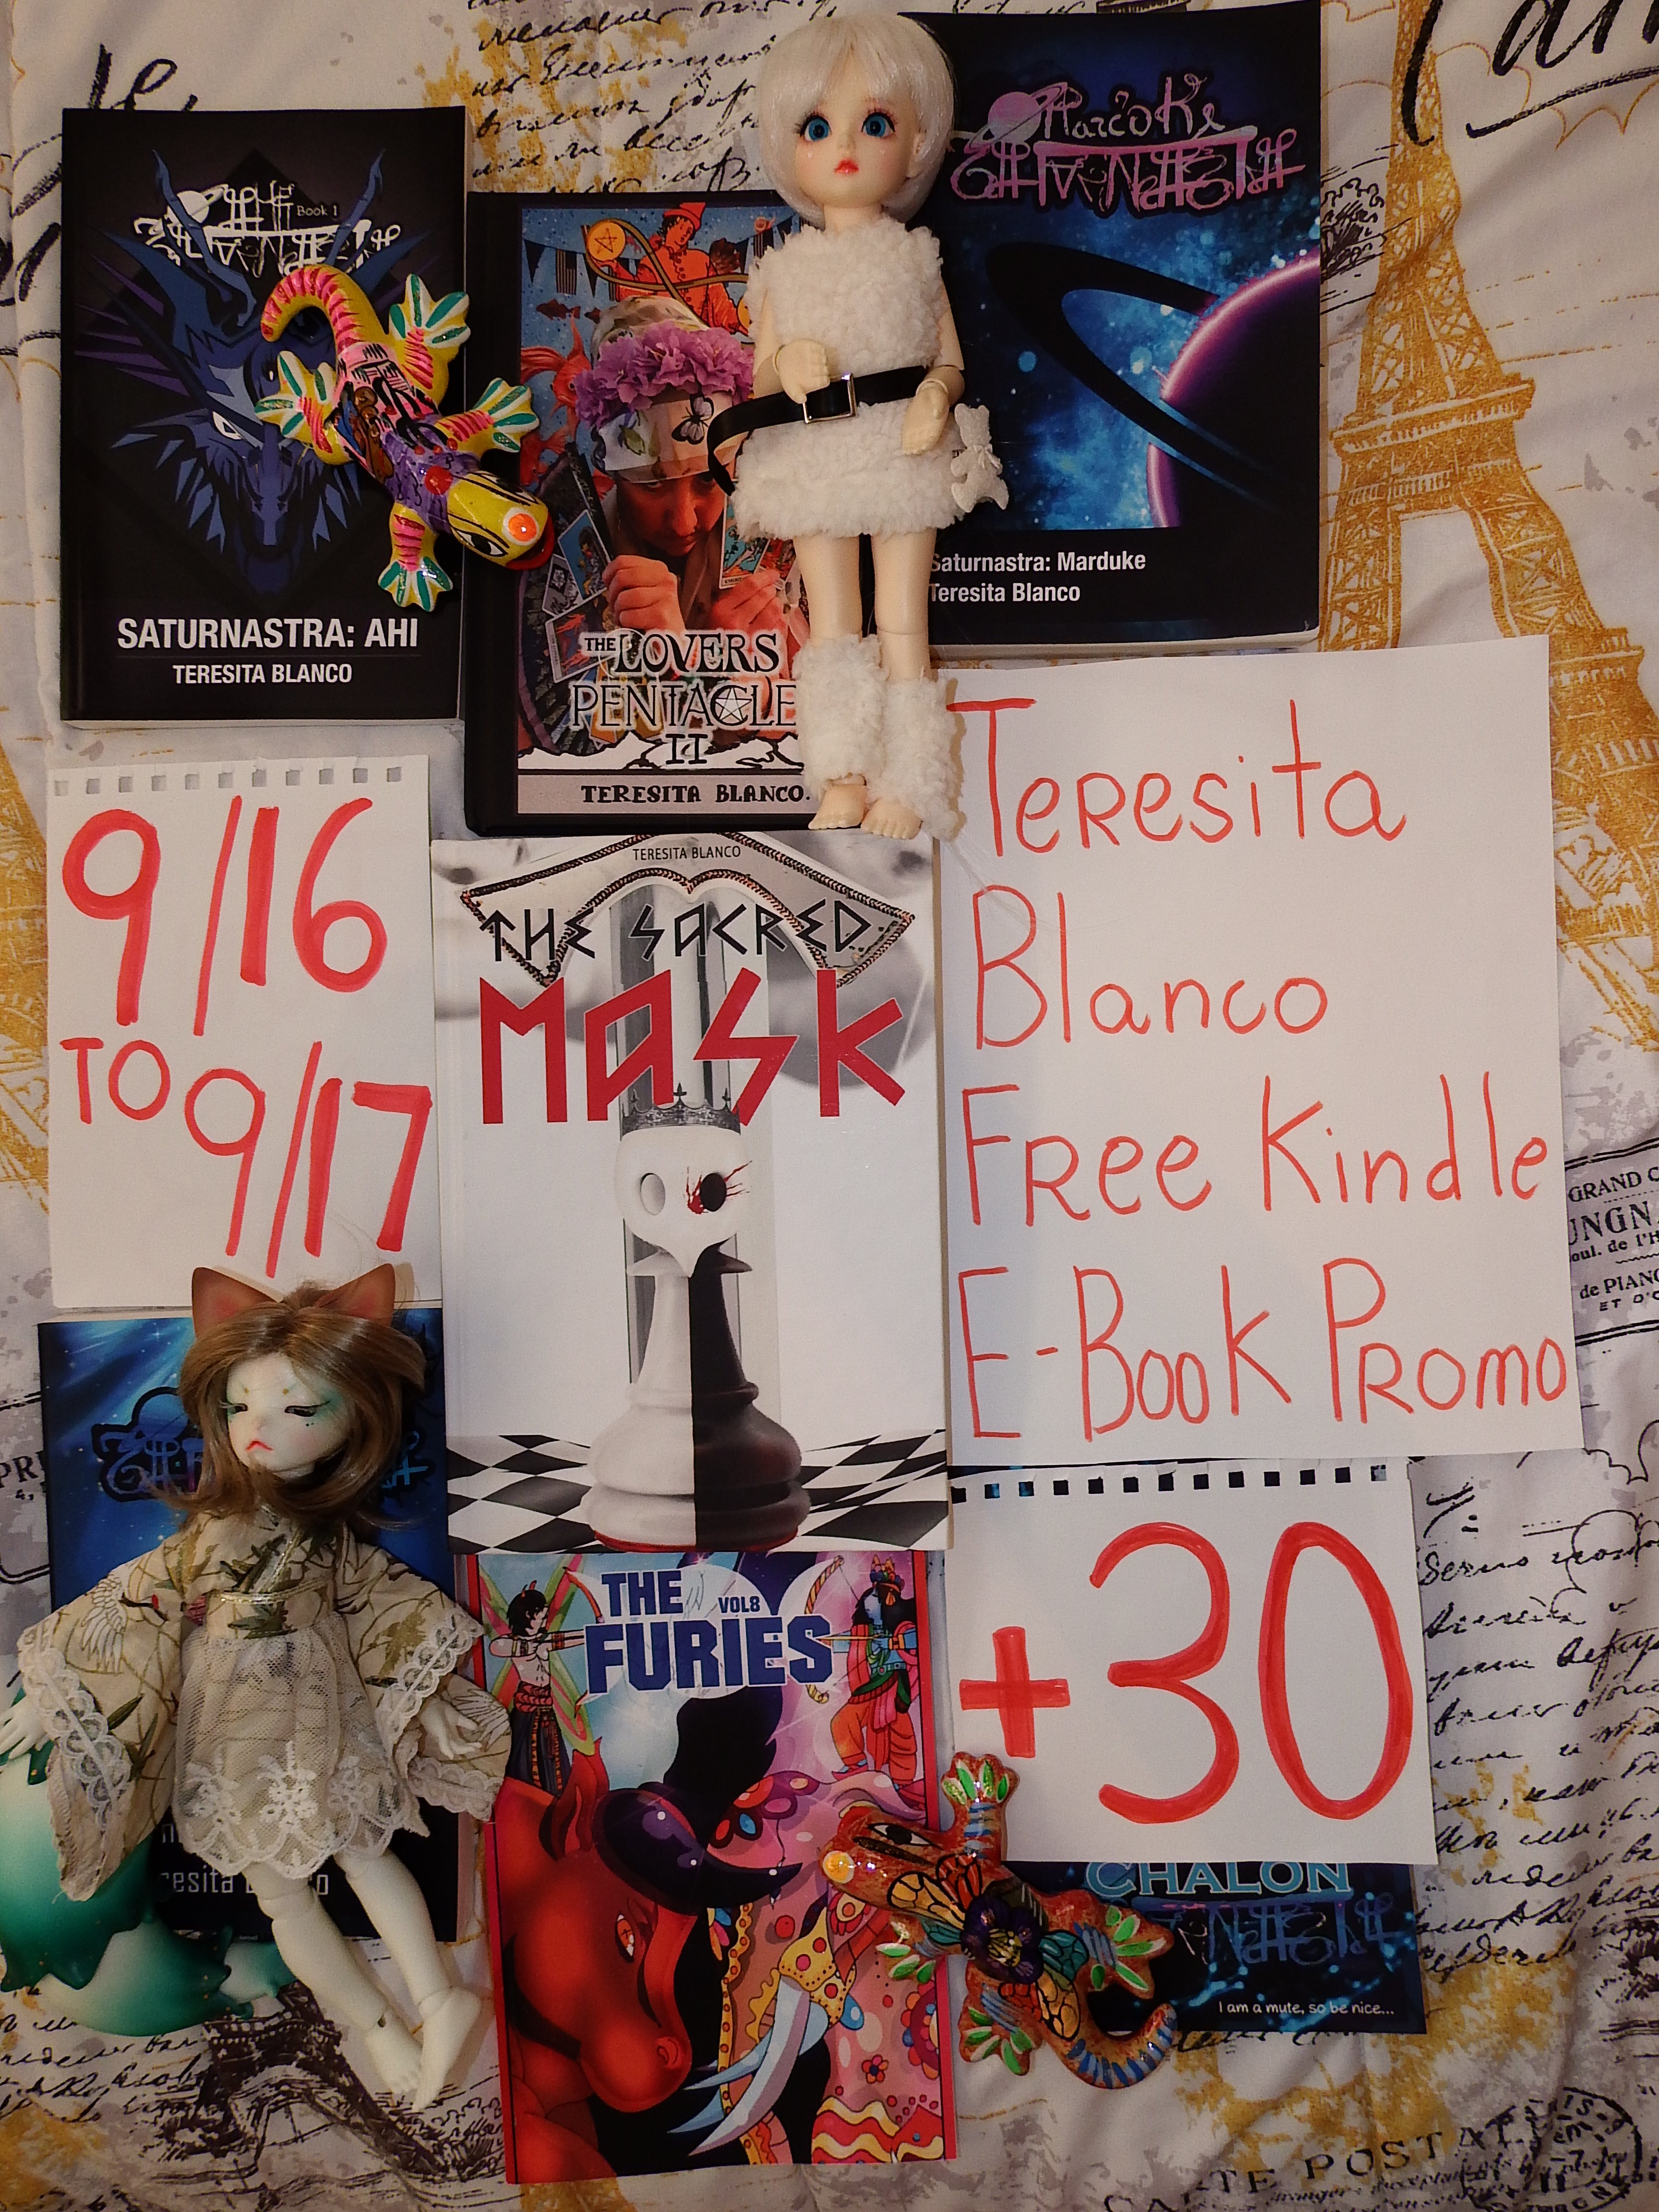 artsy sister, teresita blanco, free kindle ebook promo